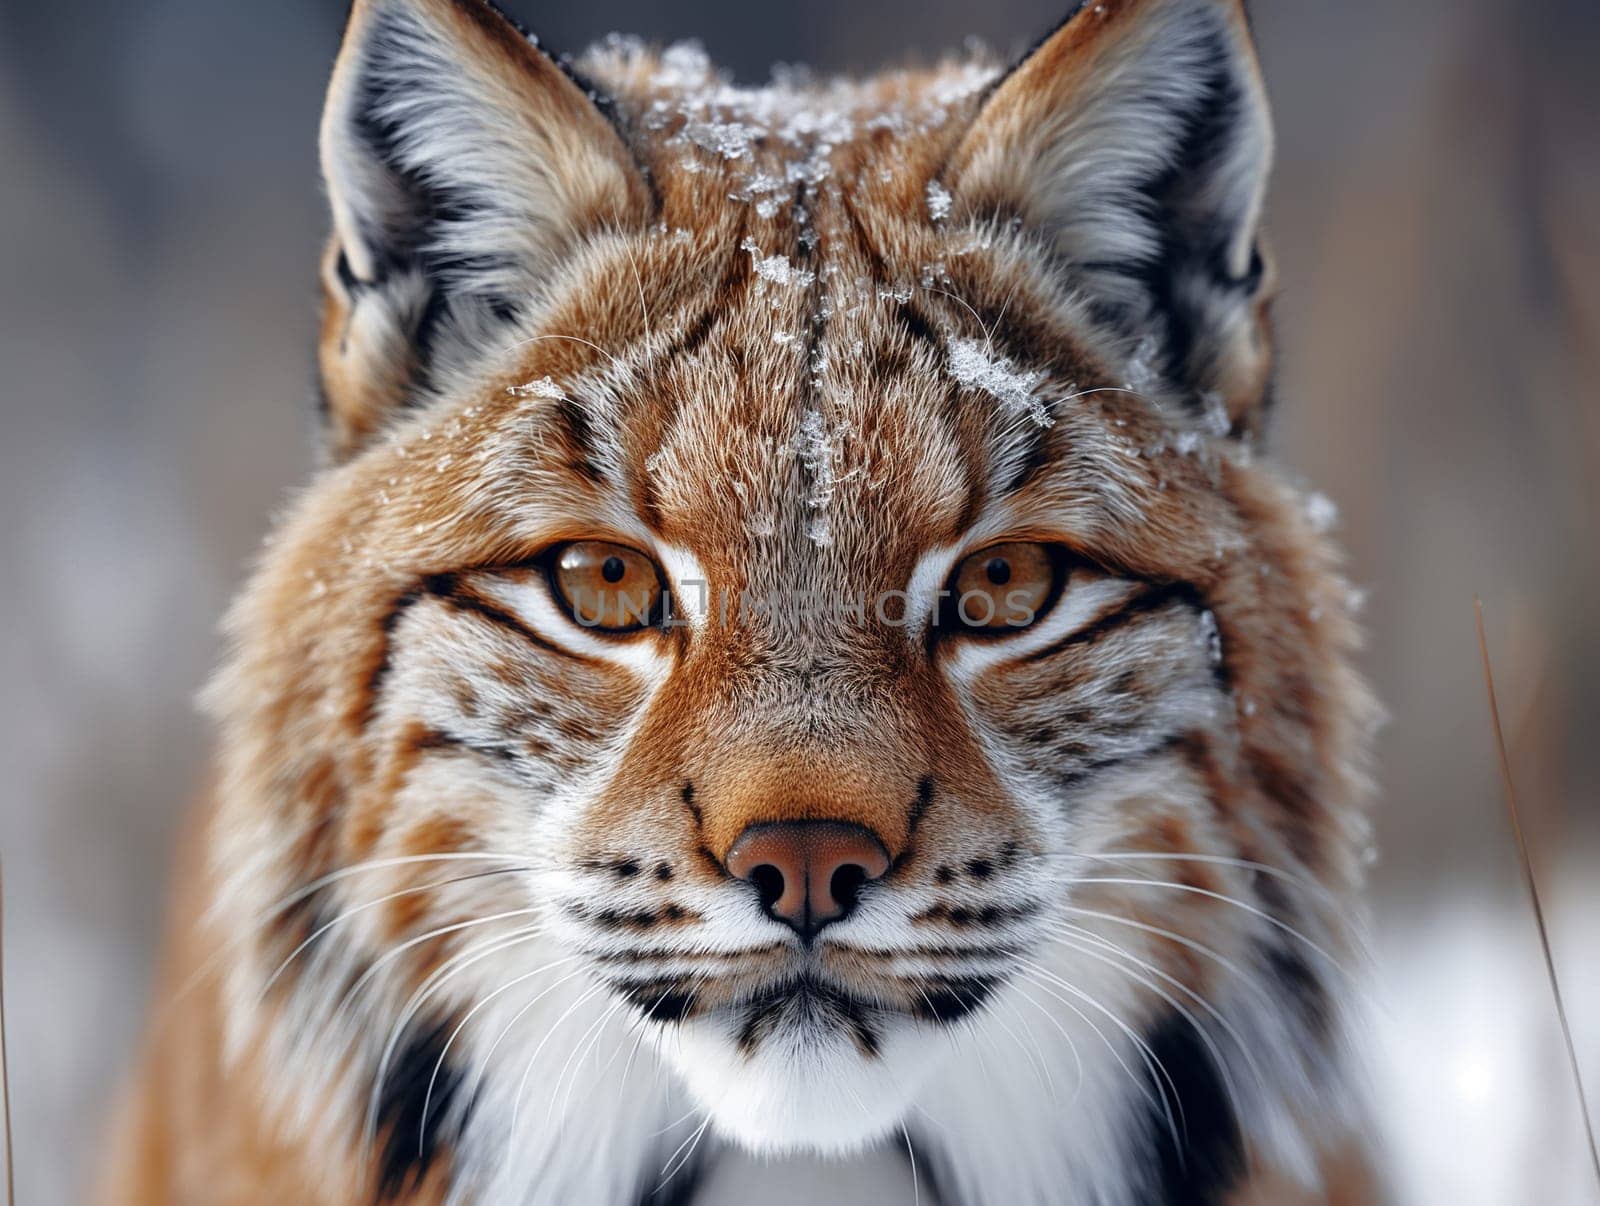 A wild eurasian lynx in nature